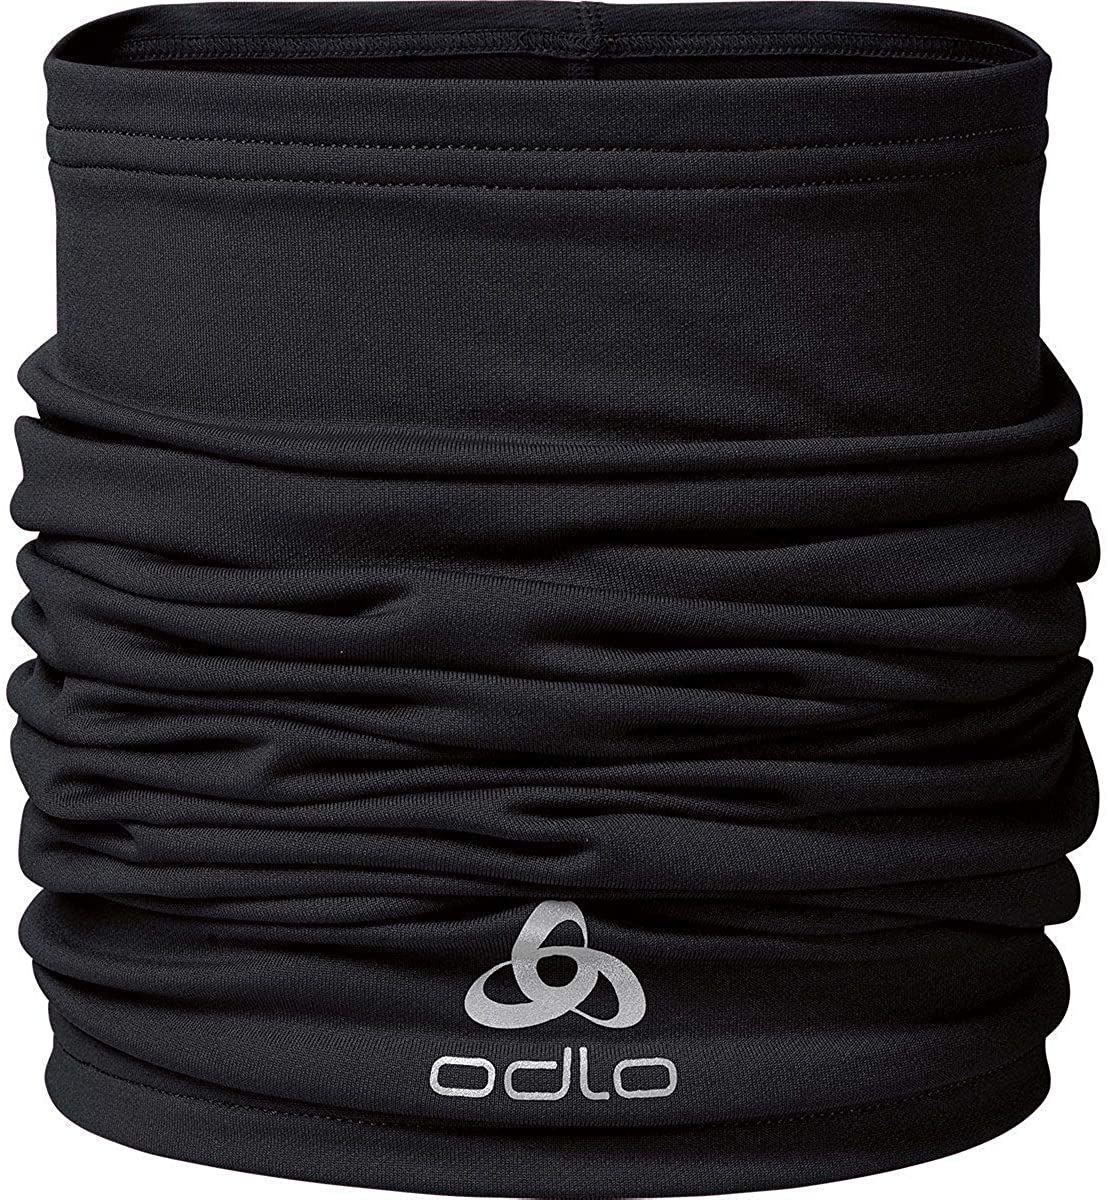 Odlo Tube Ceramiwarm Pro Headwear